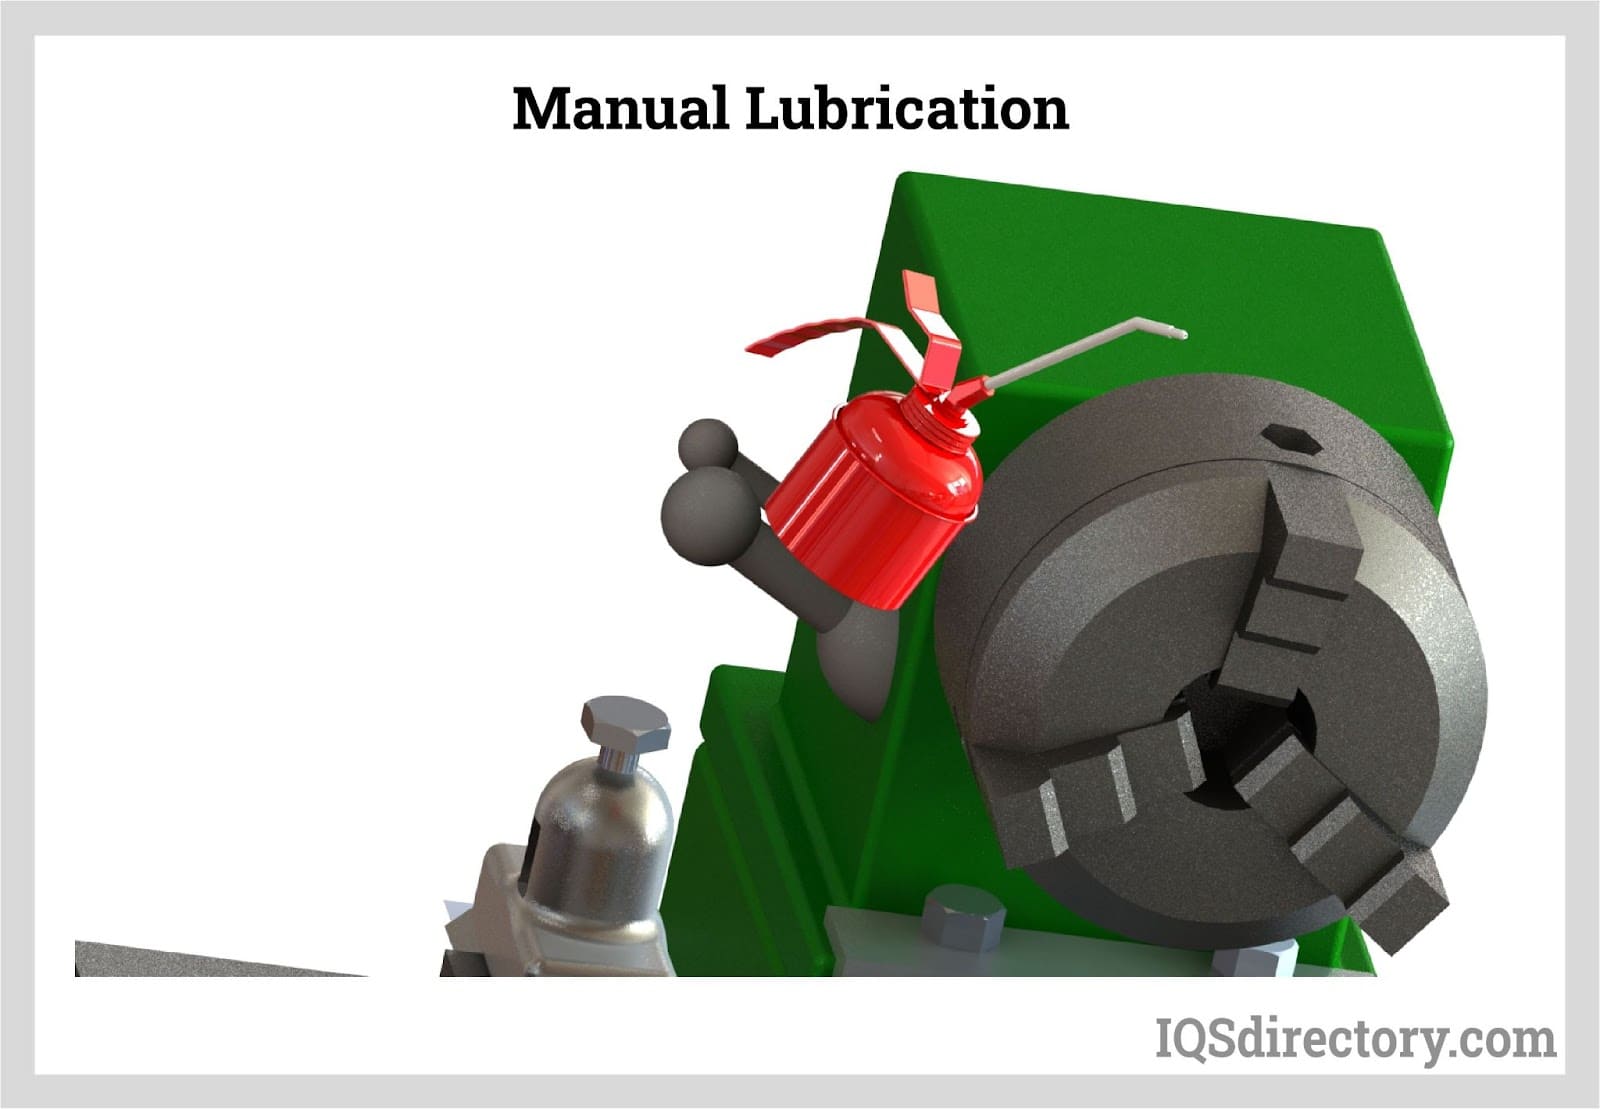 Manual Lubrication